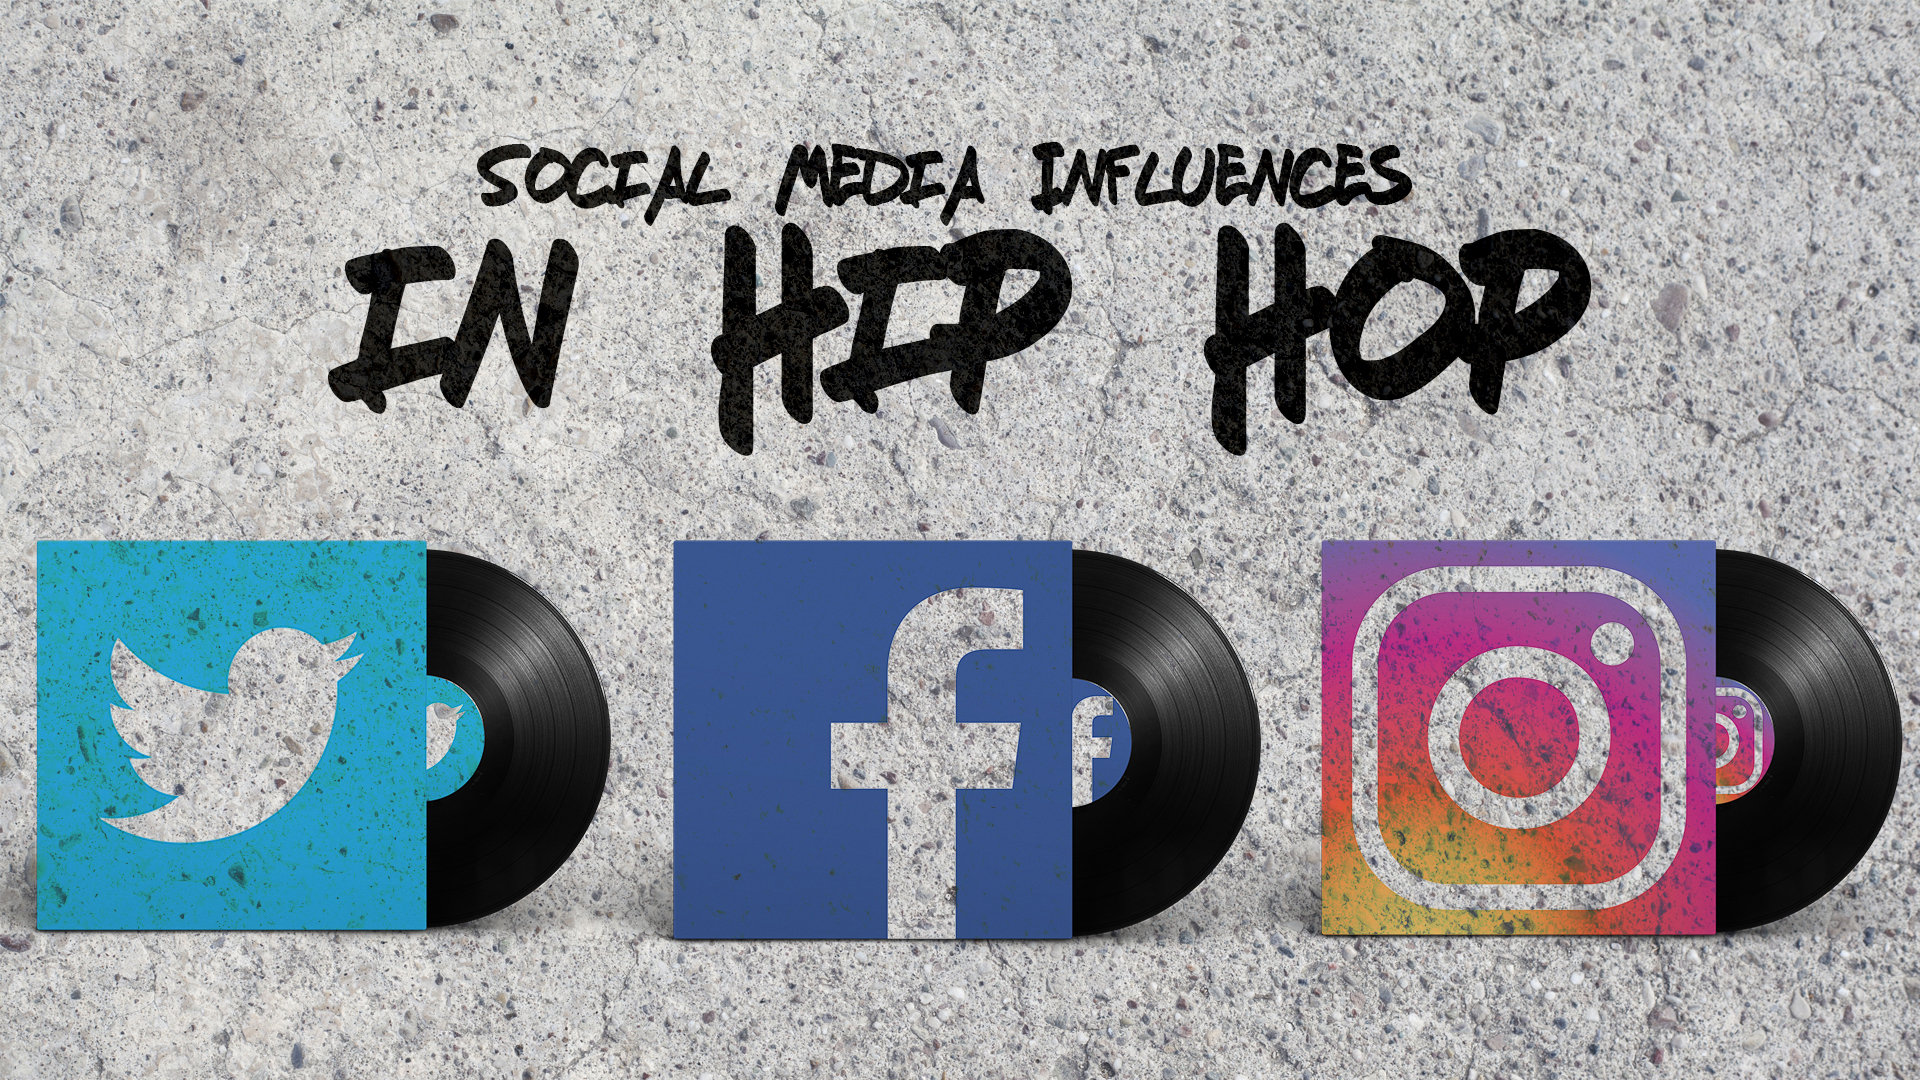 Social Media Influences in Hip Hop